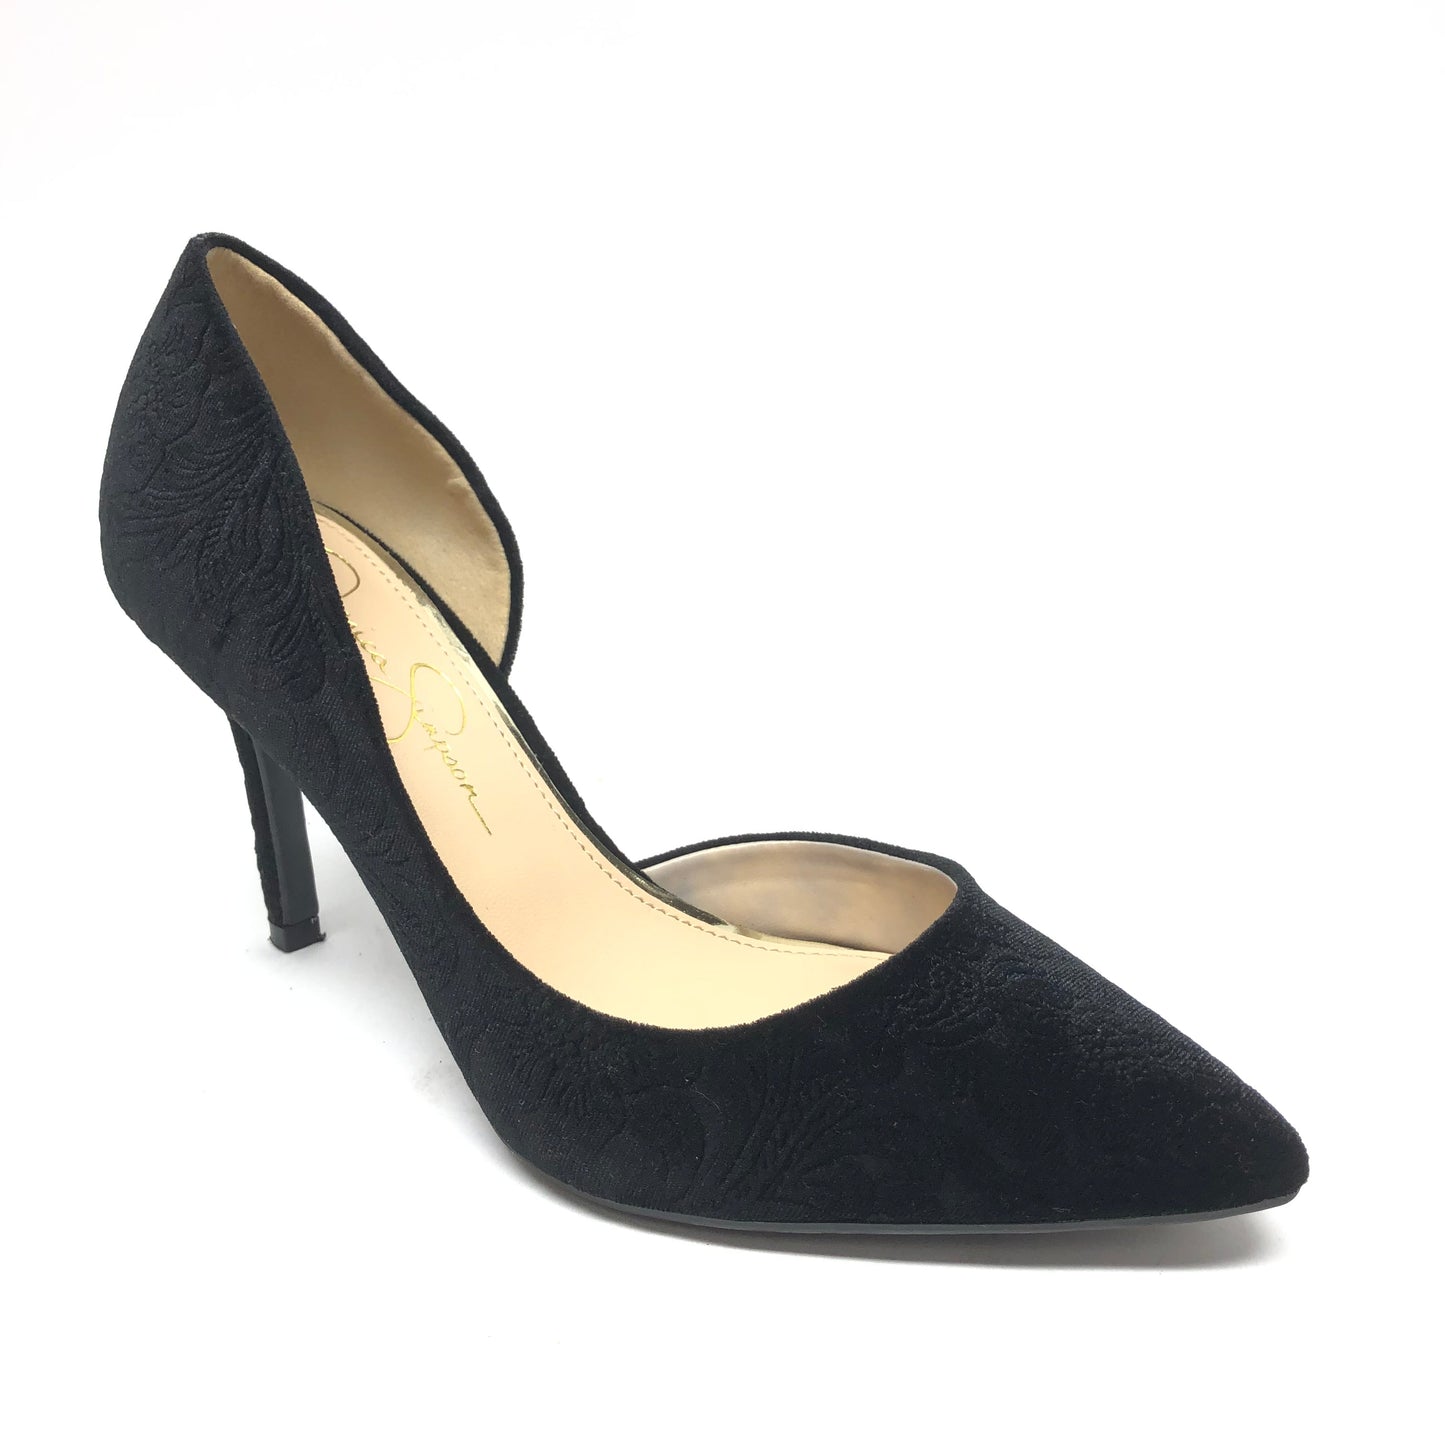 Black Shoes Heels Stiletto Jessica Simpson, Size 8